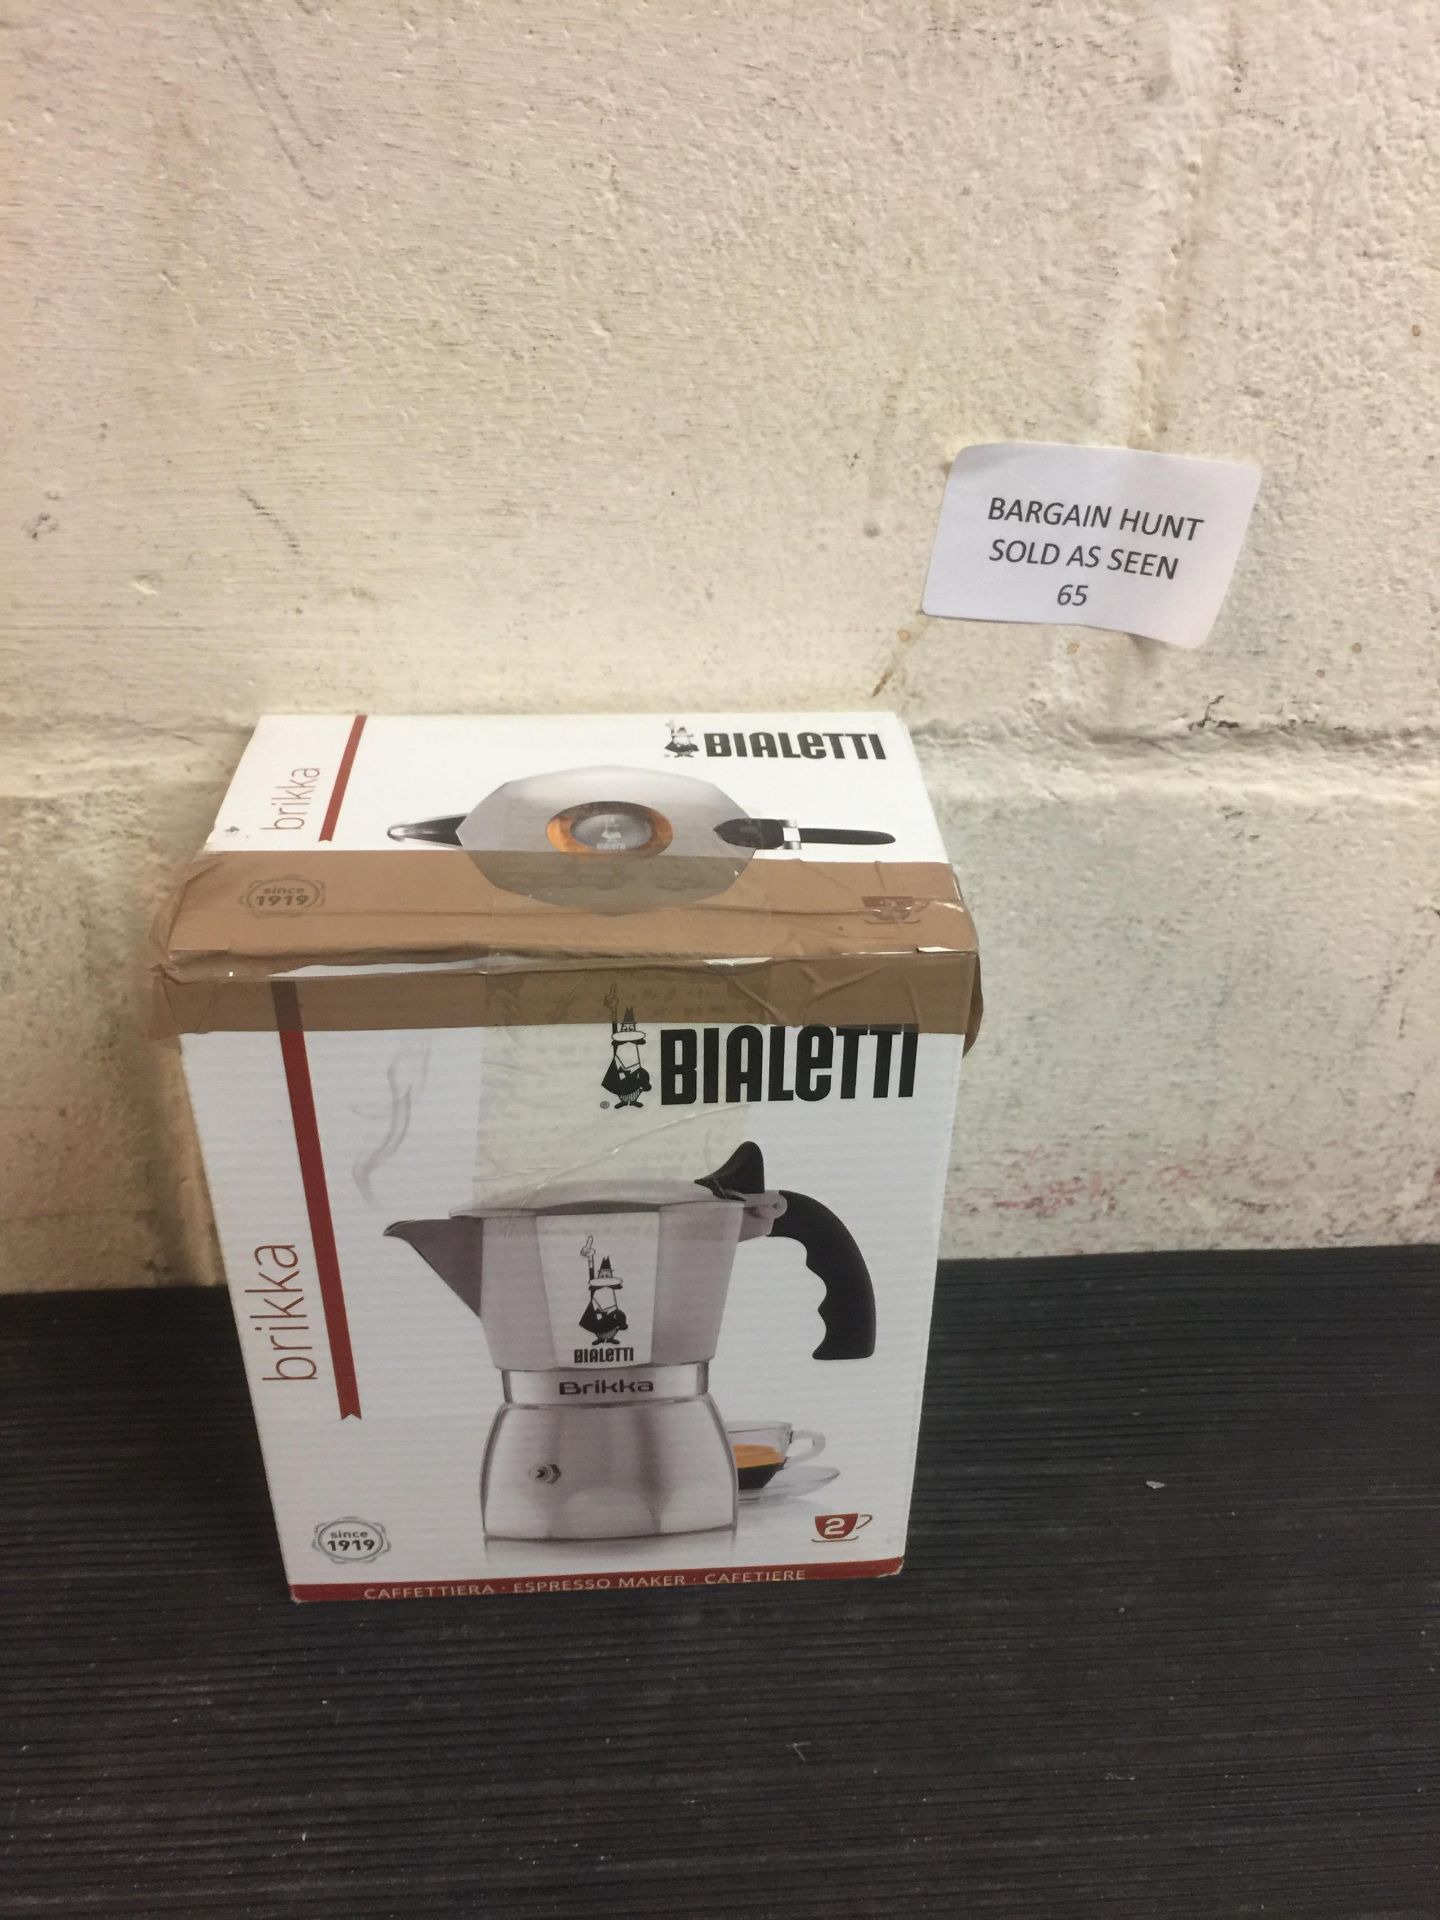 Bialetti Brikka Espresso Maker